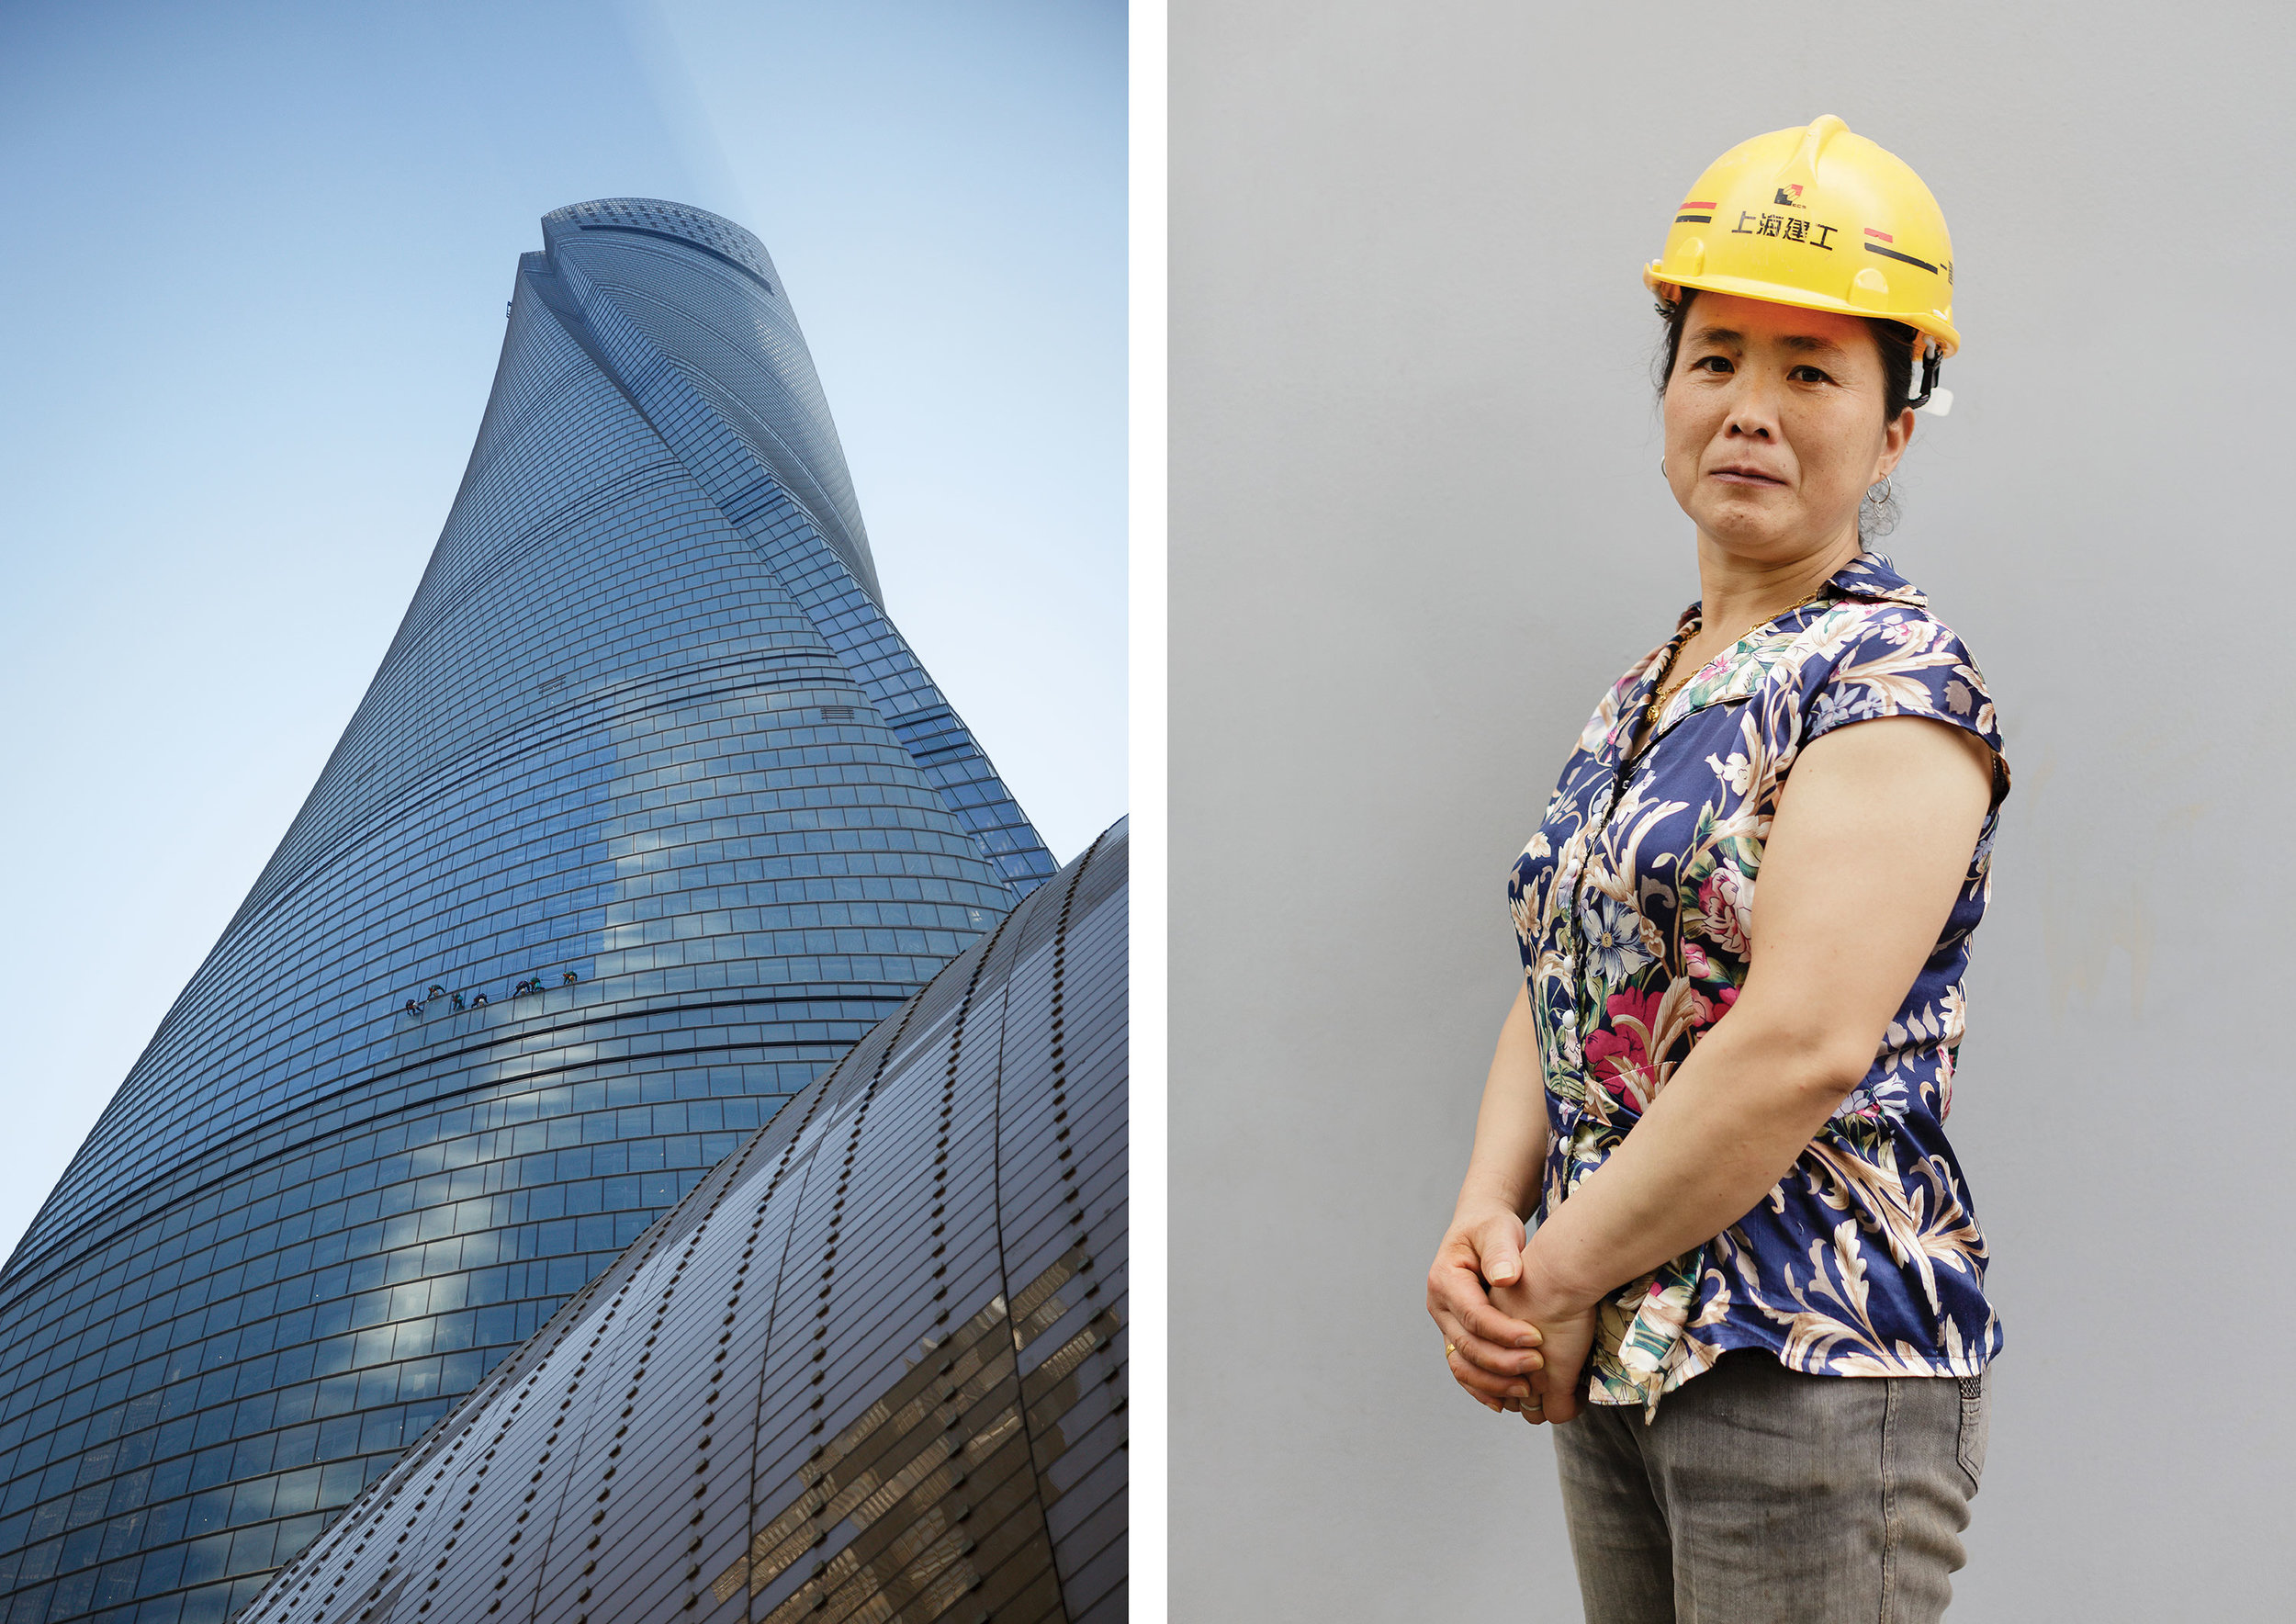 Shanghai_Tower-workers-and-building20.jpg